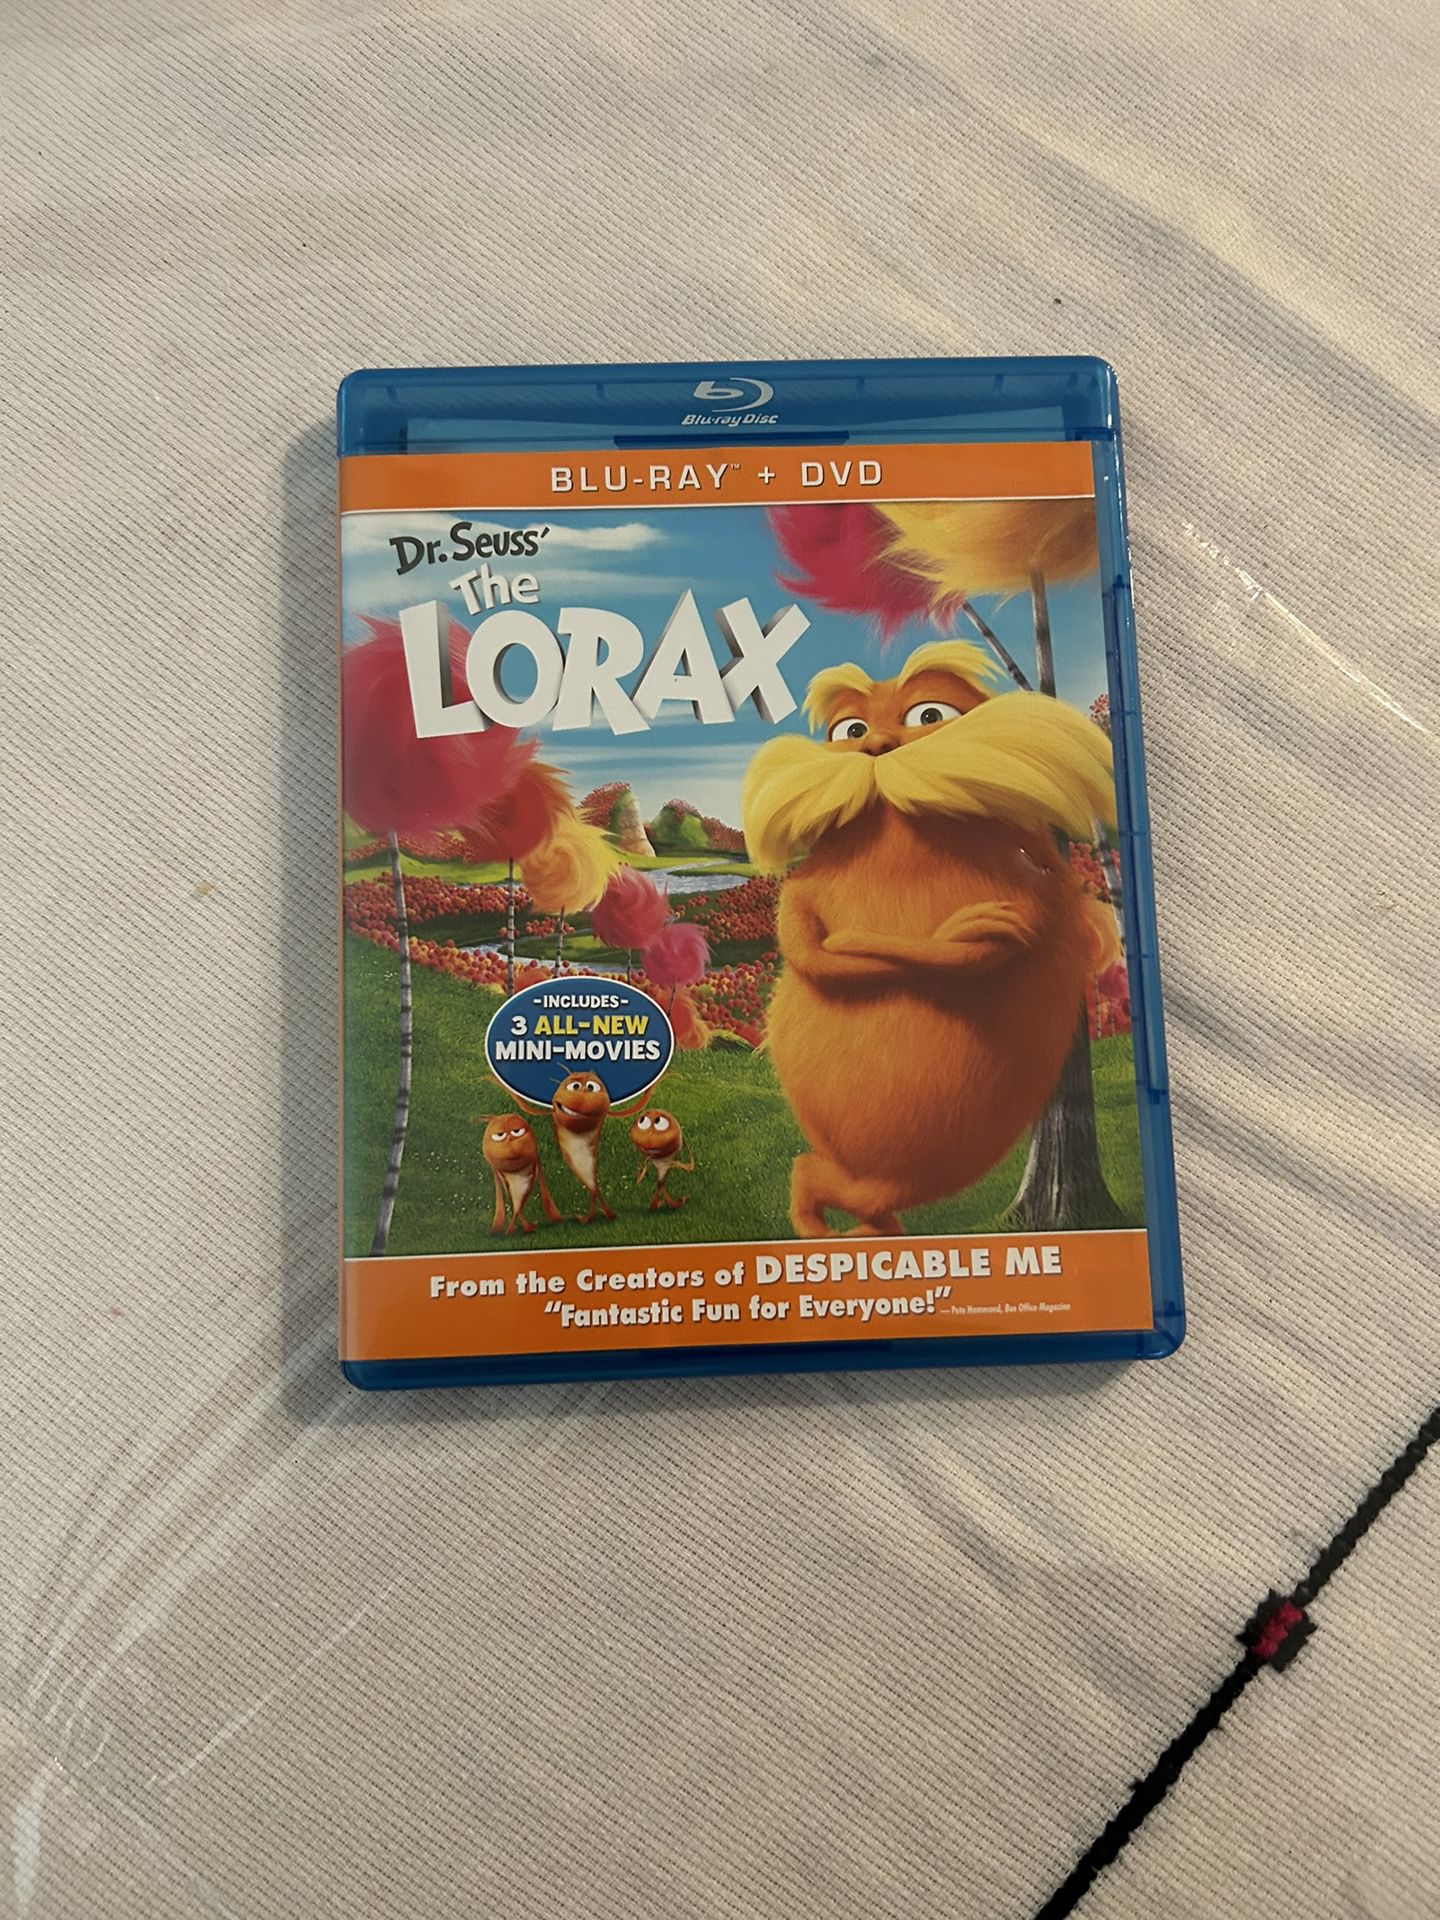 Lorax movie on dvd and blu-ray